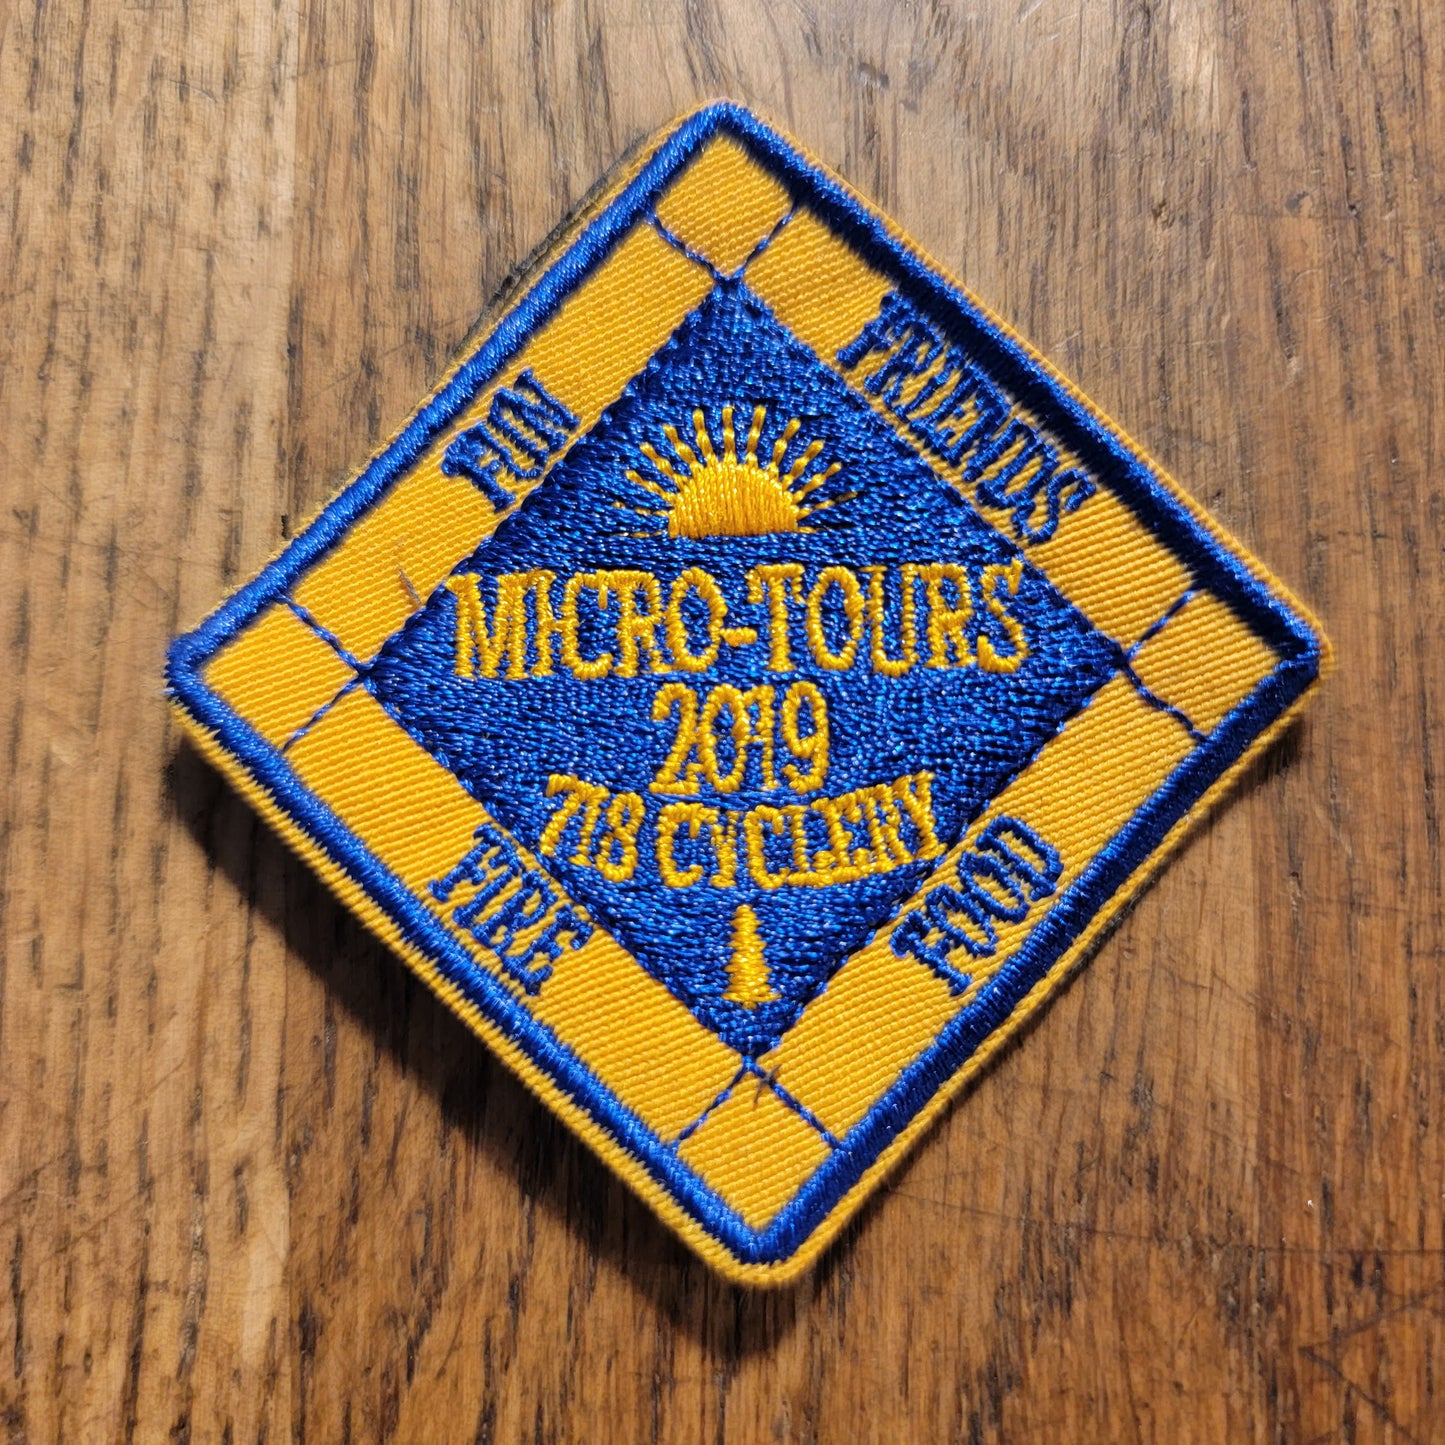 2019 Micro-Tour Patch